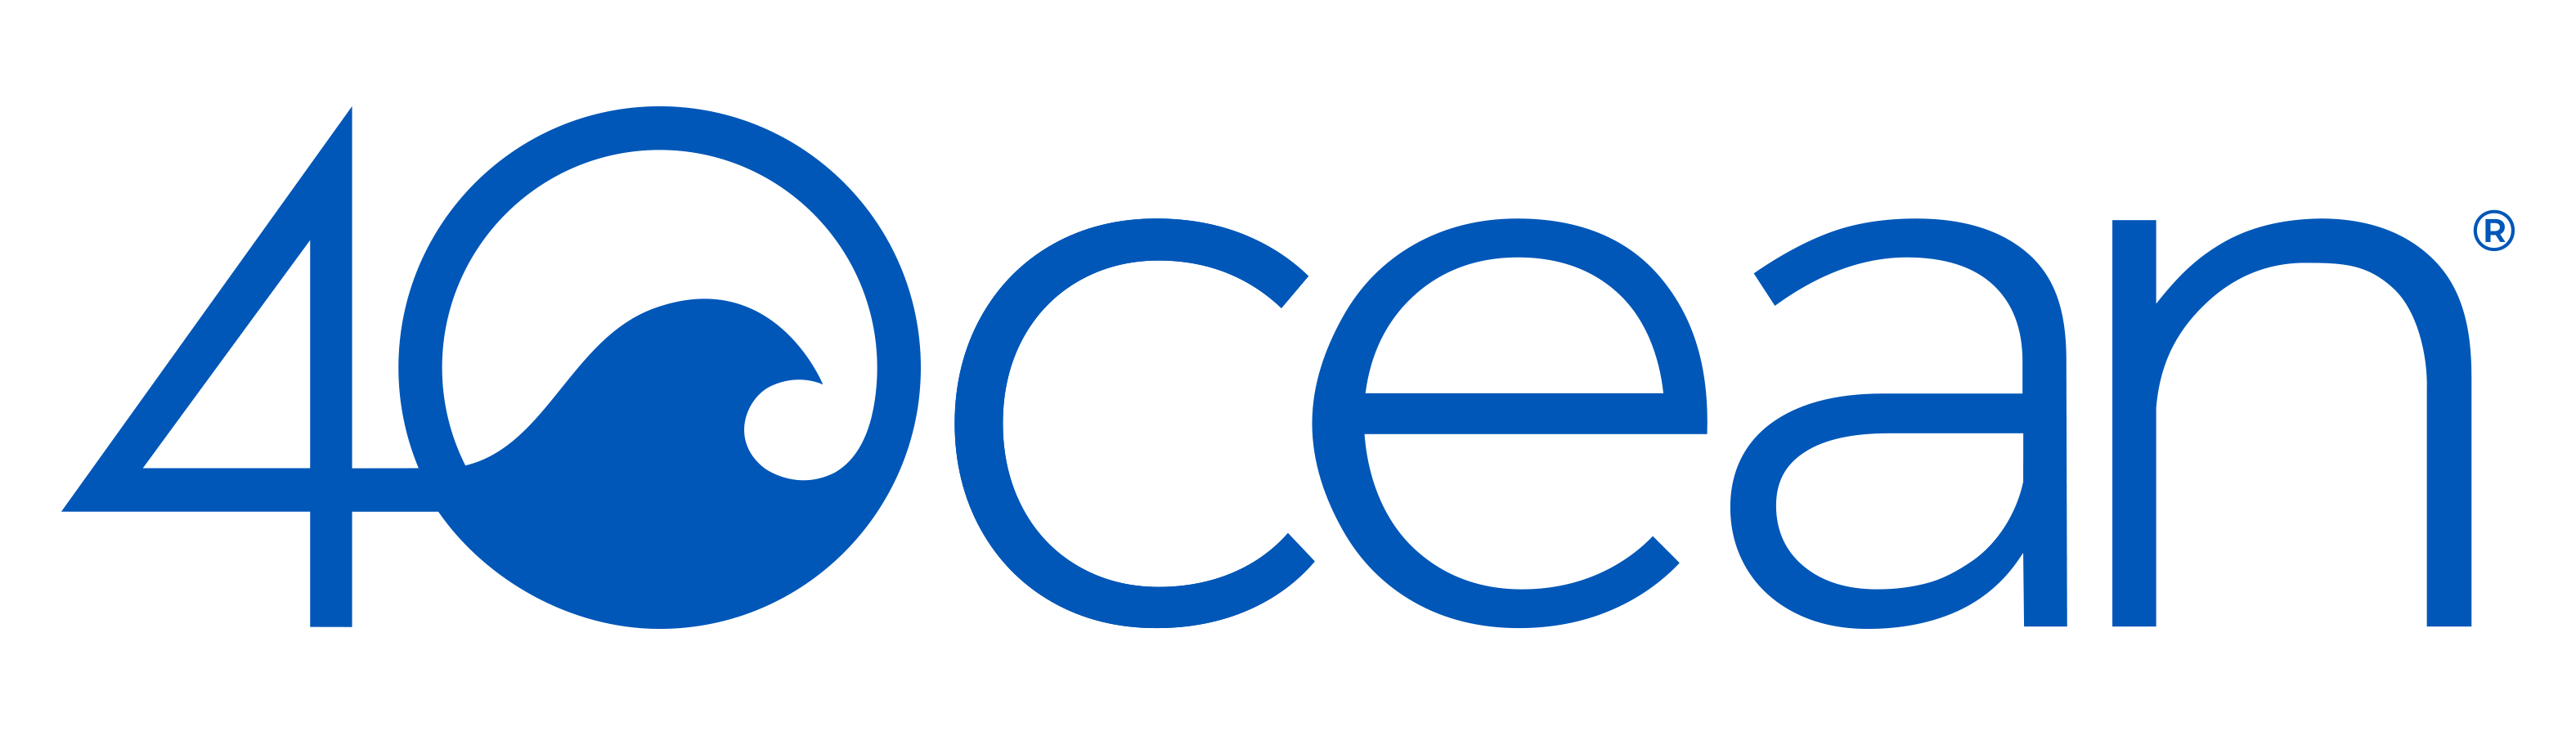 1 - 4 OCEAN * Breast Cancer Awareness Month * Logo_Blue